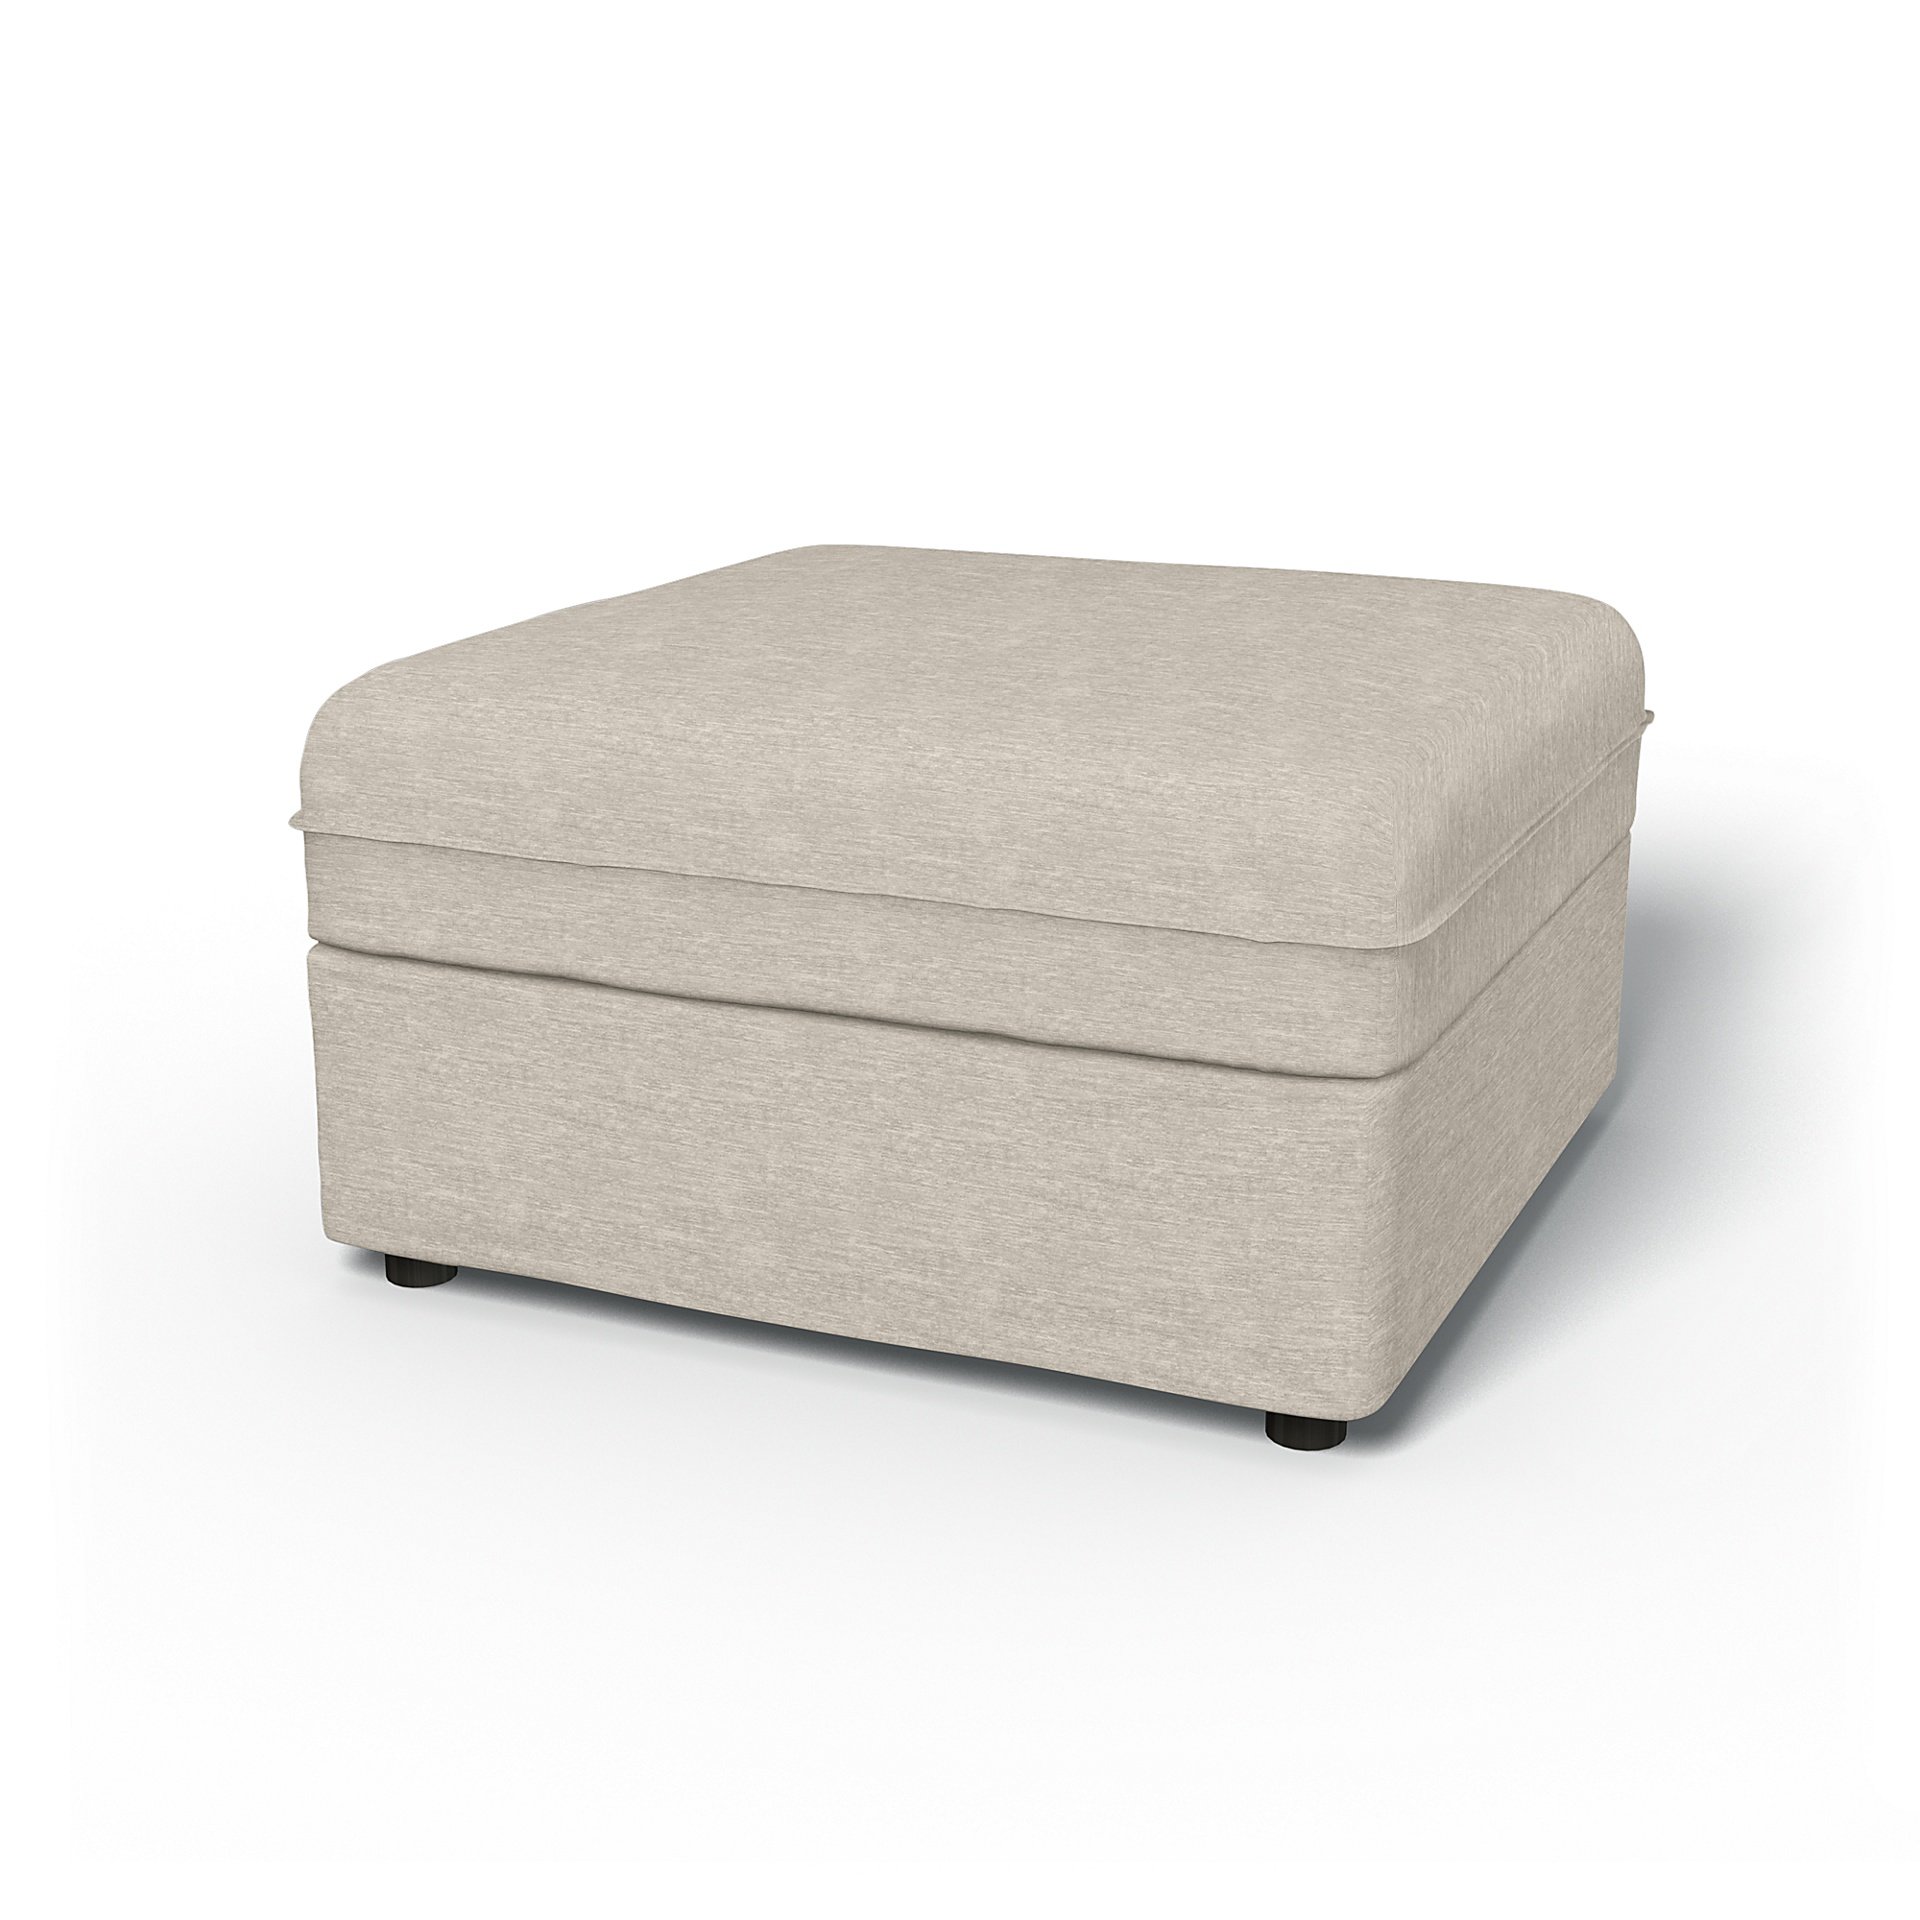 IKEA - Vallentuna Seat Module with Storage Cover 80x80cm 32x32in, Natural White, Velvet - Bemz